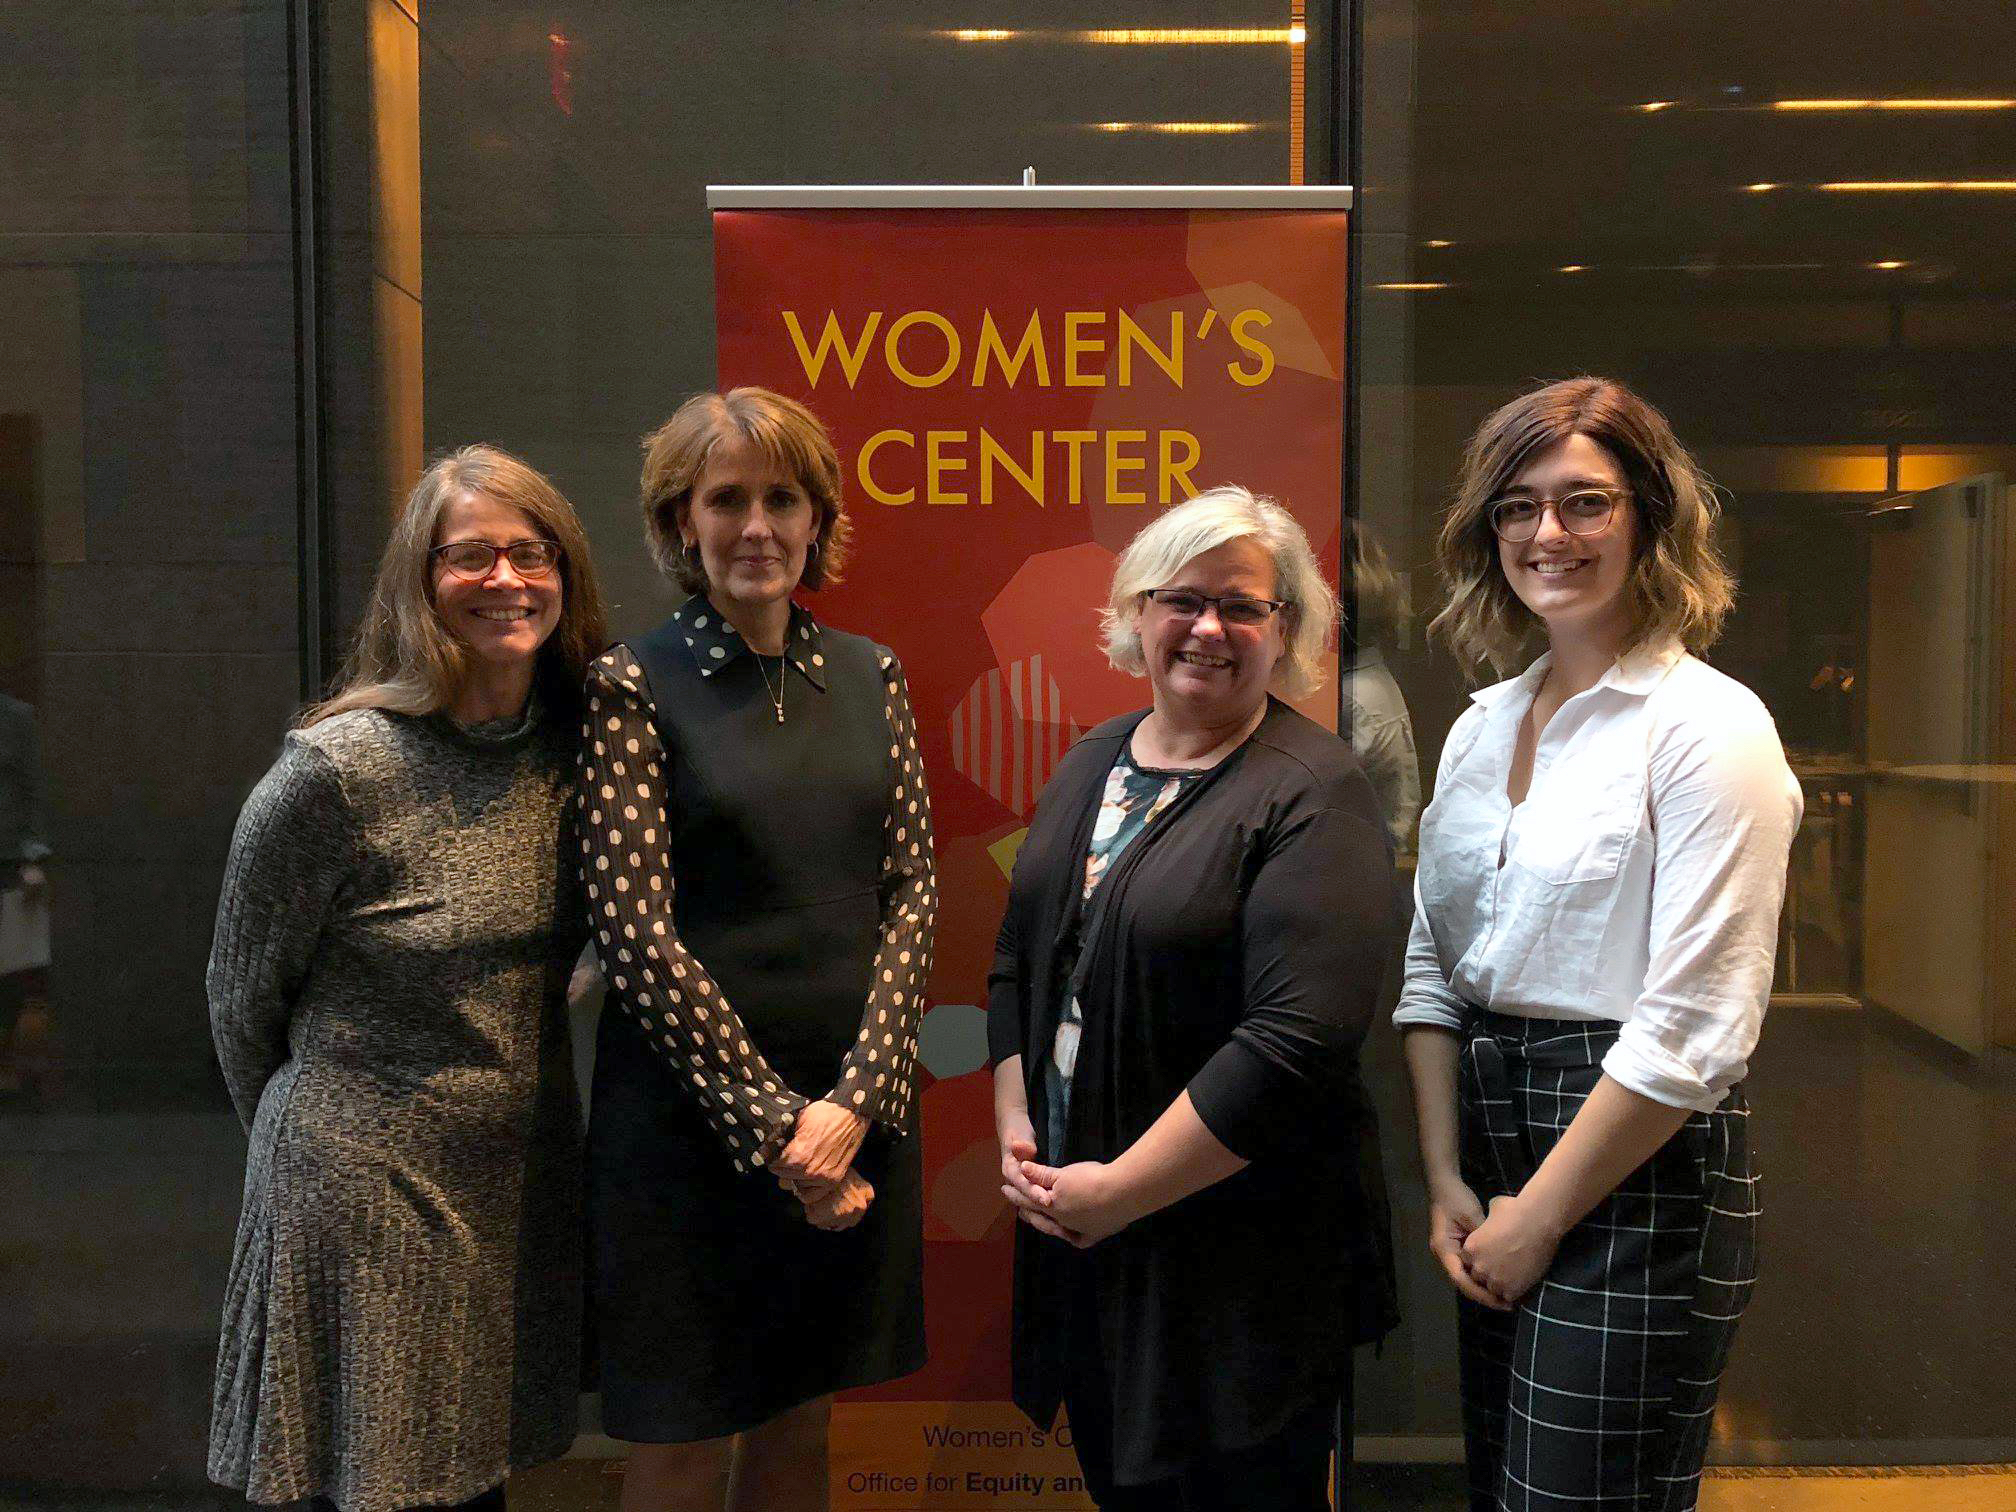 Women's Center leadership award winners